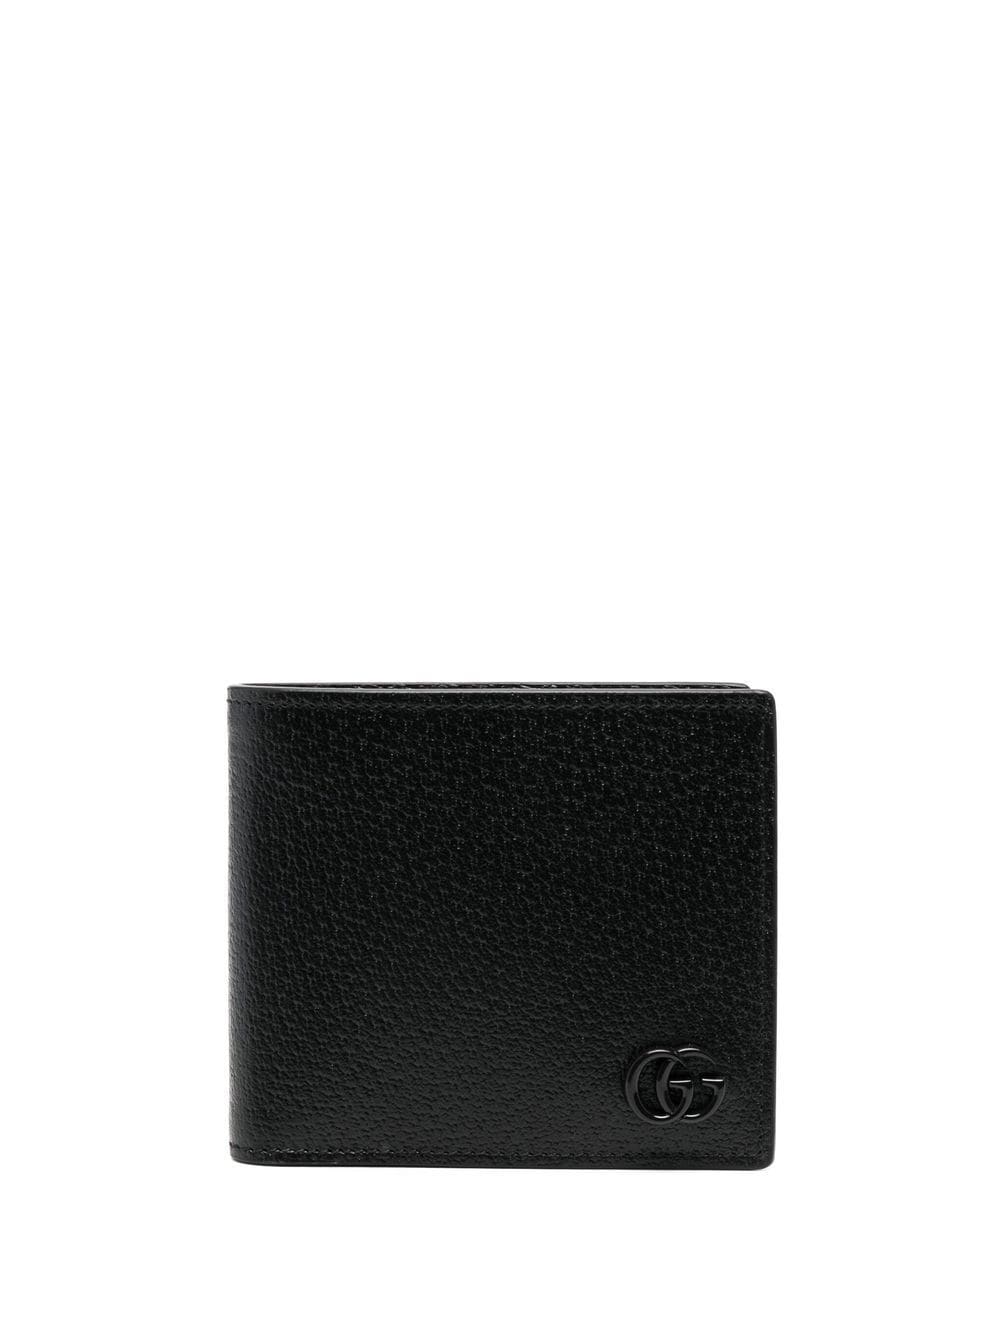 Gucci GG Marmont leather coin wallet - Black von Gucci